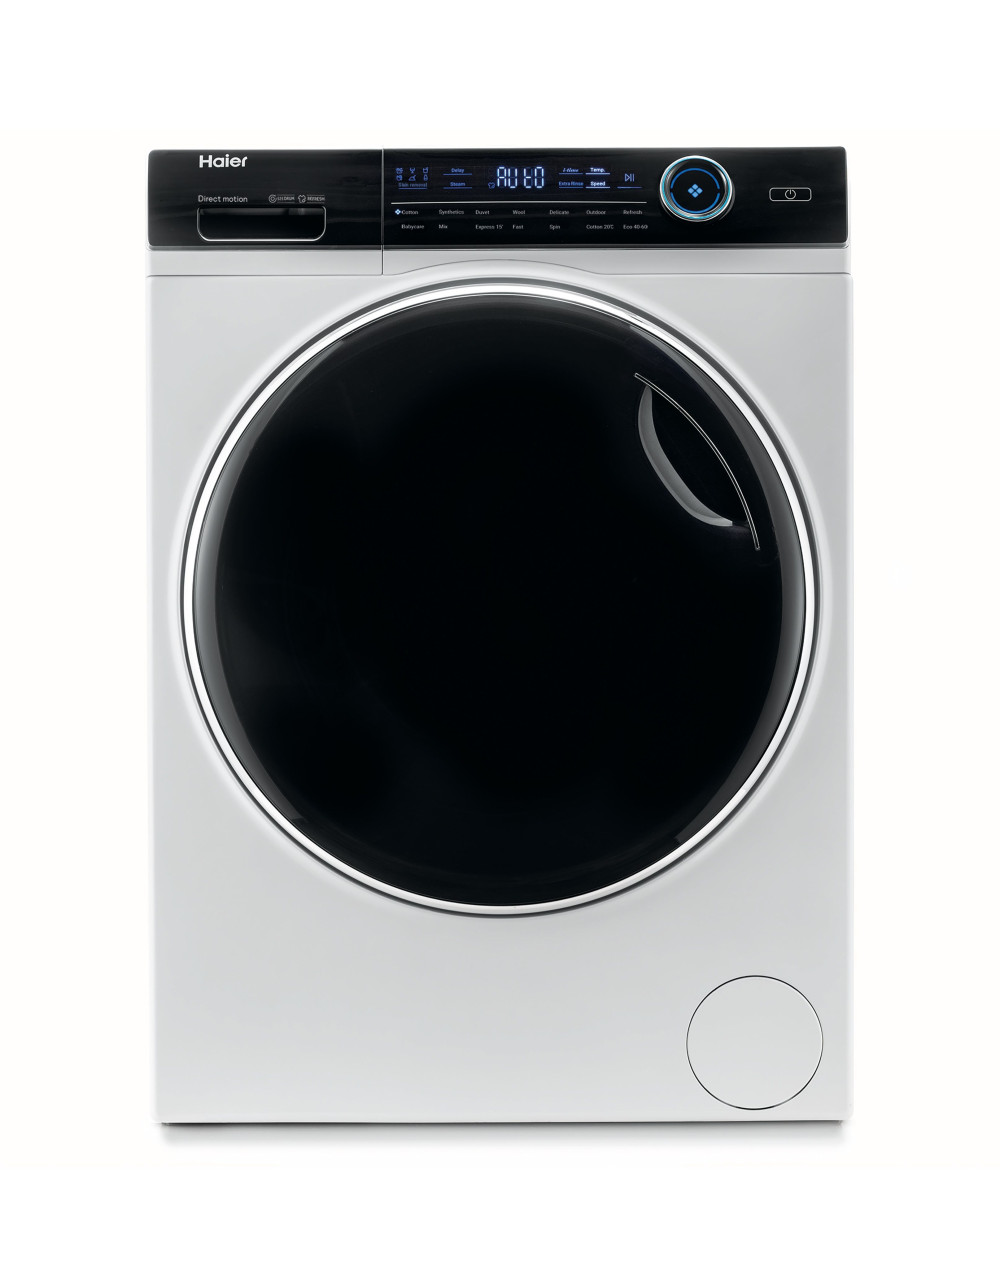 Haier HW80-B14979 Freestanding Washing Machine featured image